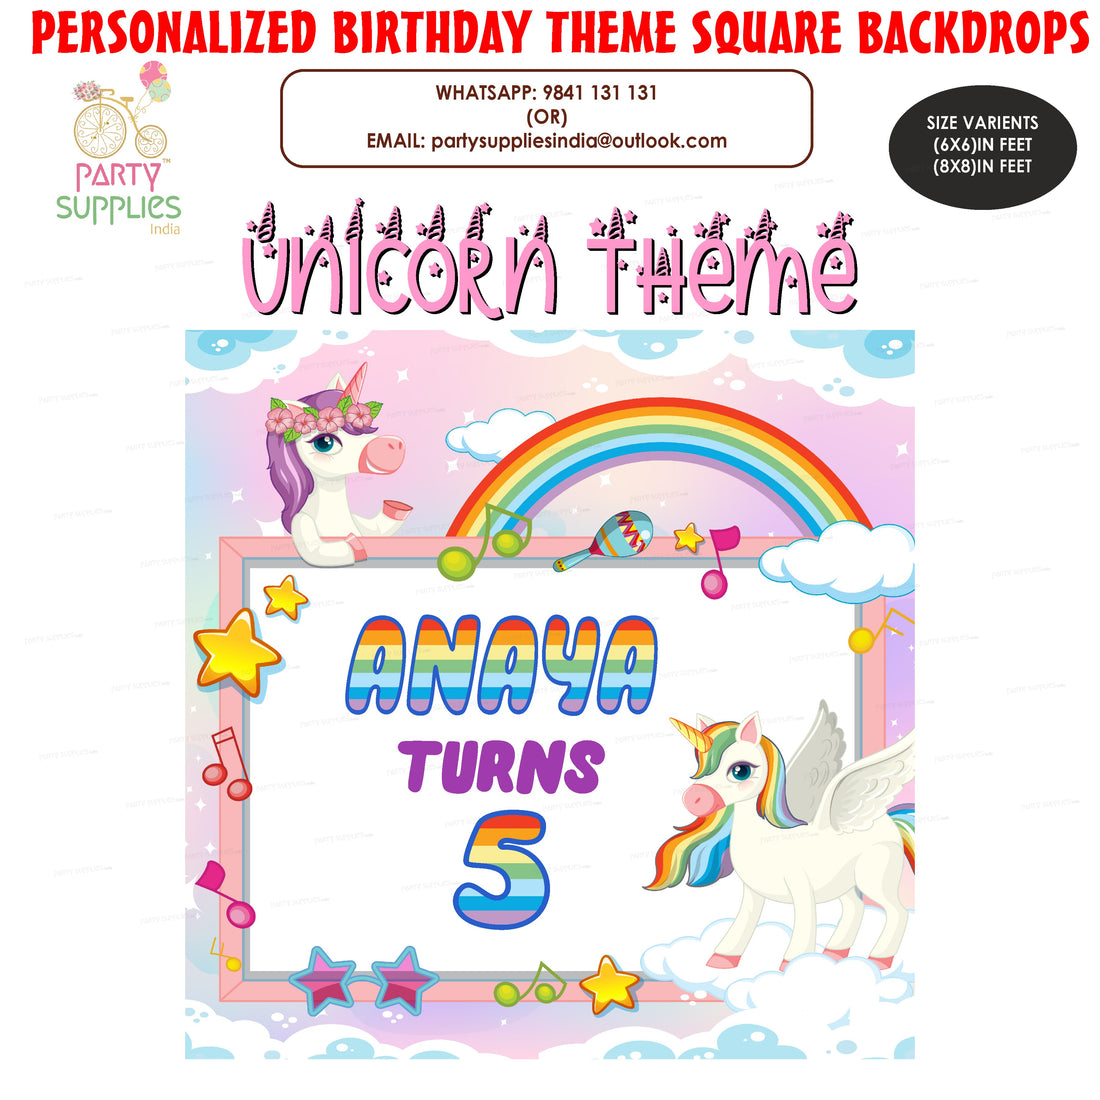 Unicorn Theme Square Backdrop